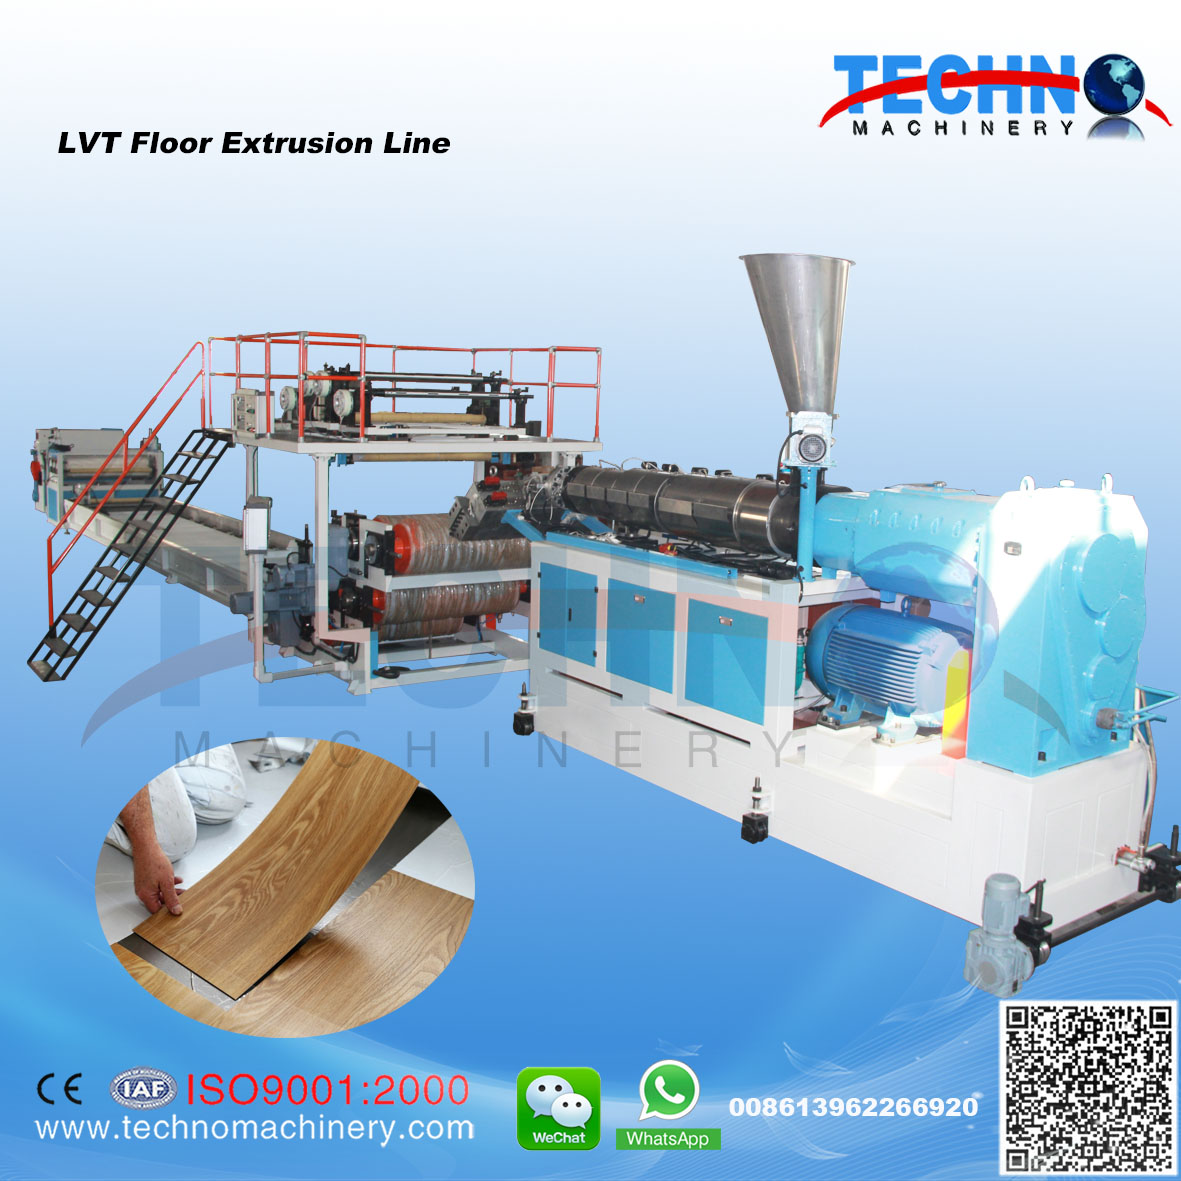 LVT Flooring Extrusion Line